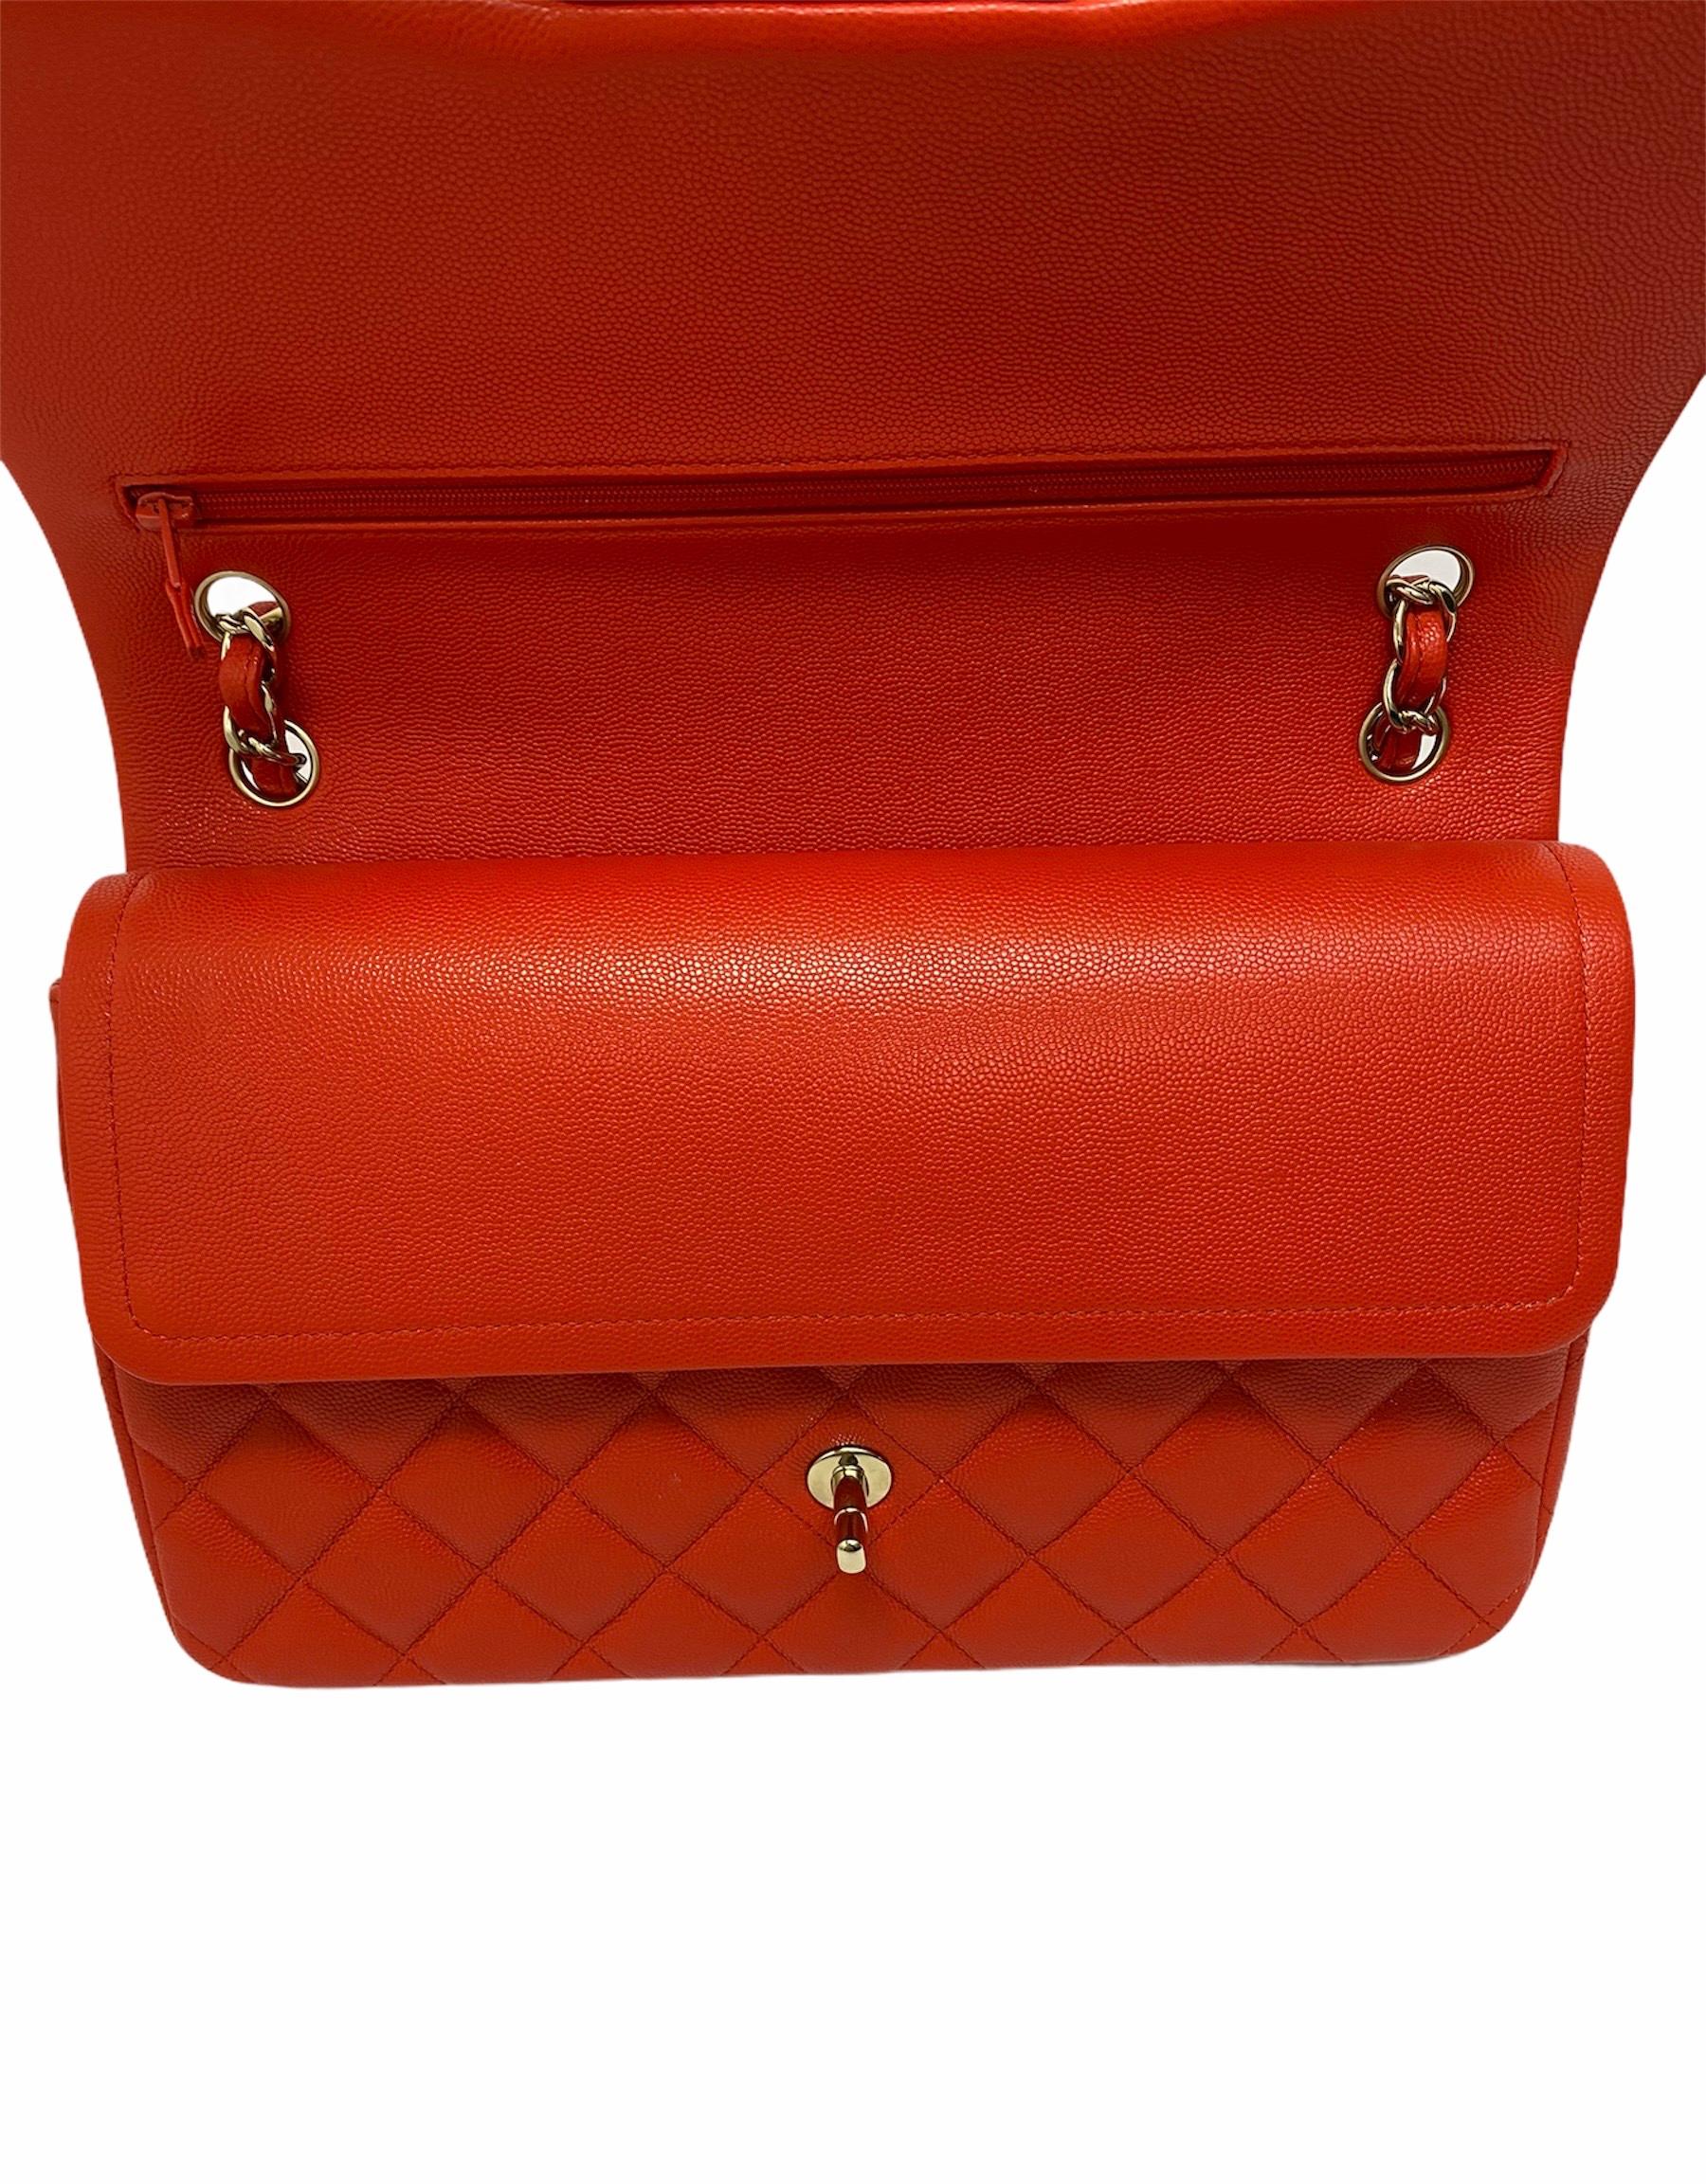 2019 Chanel Red Leather Maxi Jumbo Bag 4